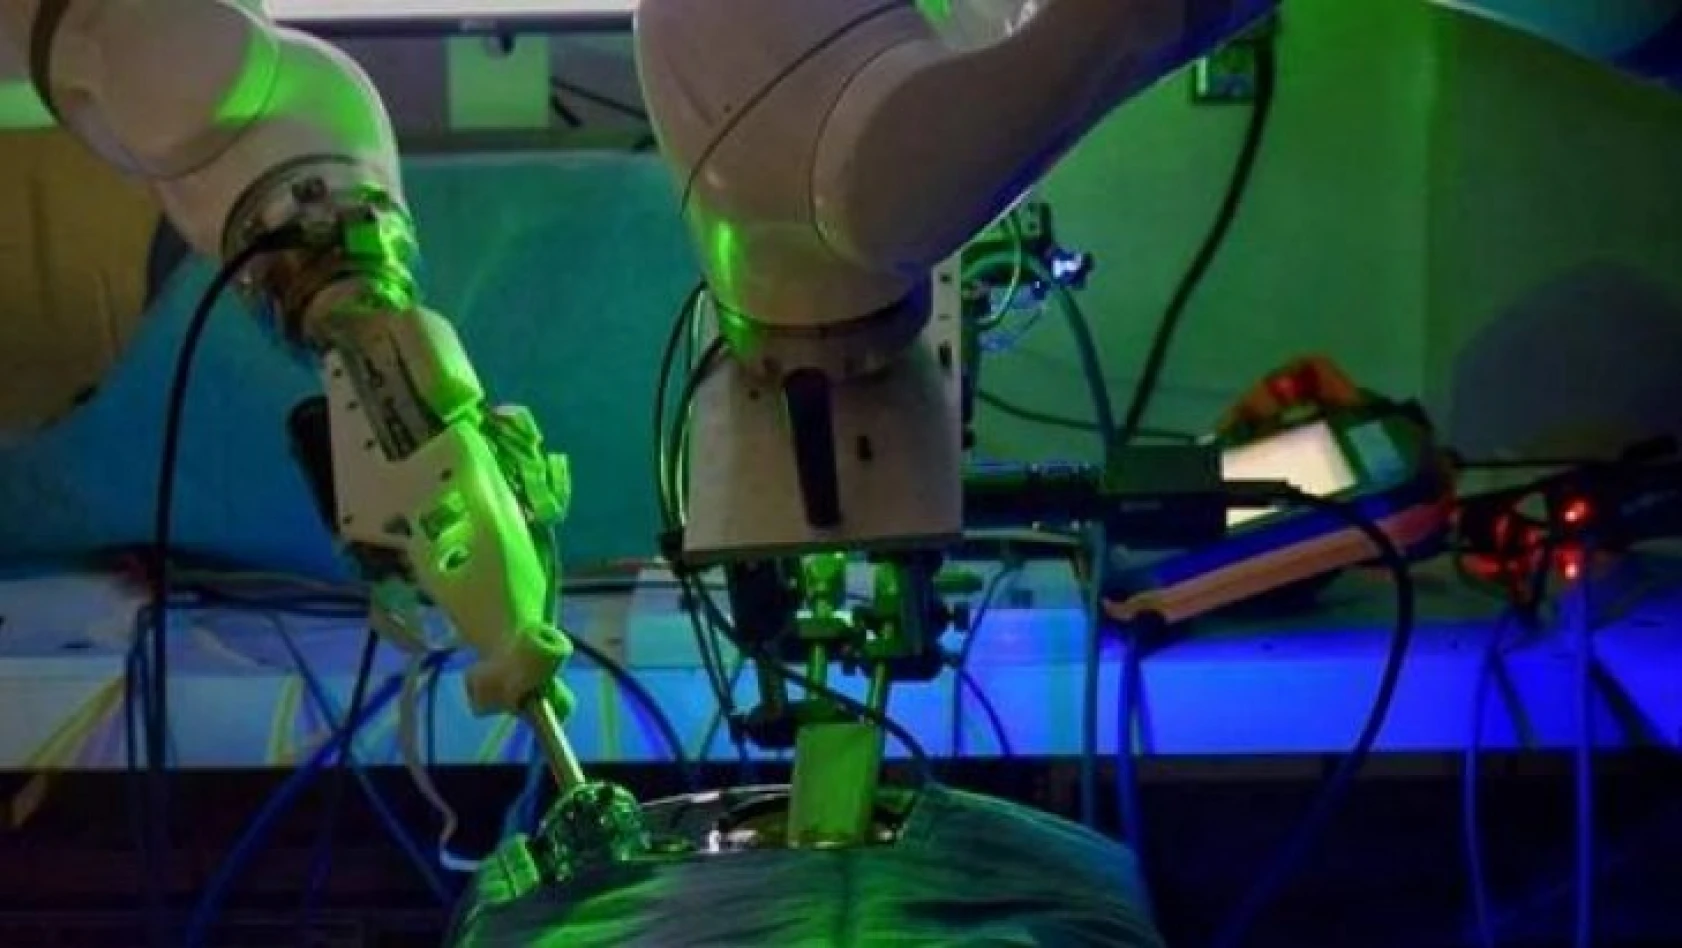 Dünyada bir ilk! Robot, insan yardımı olmadan ameliyat yaptı!